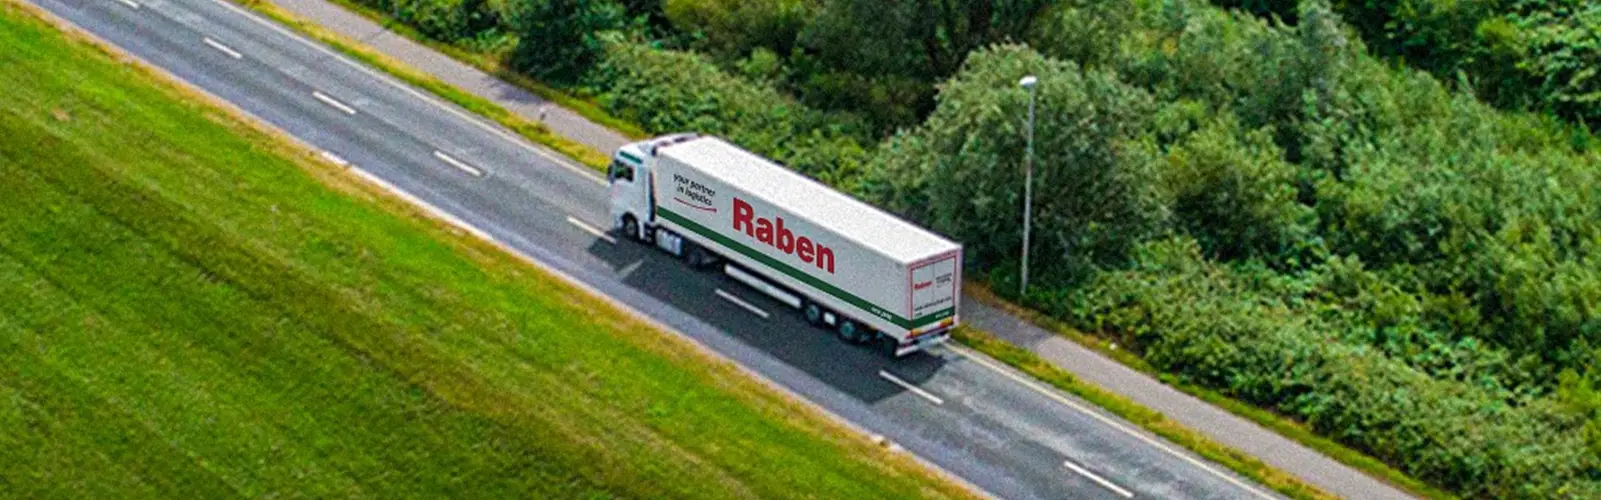 Raben Group international transport logistics